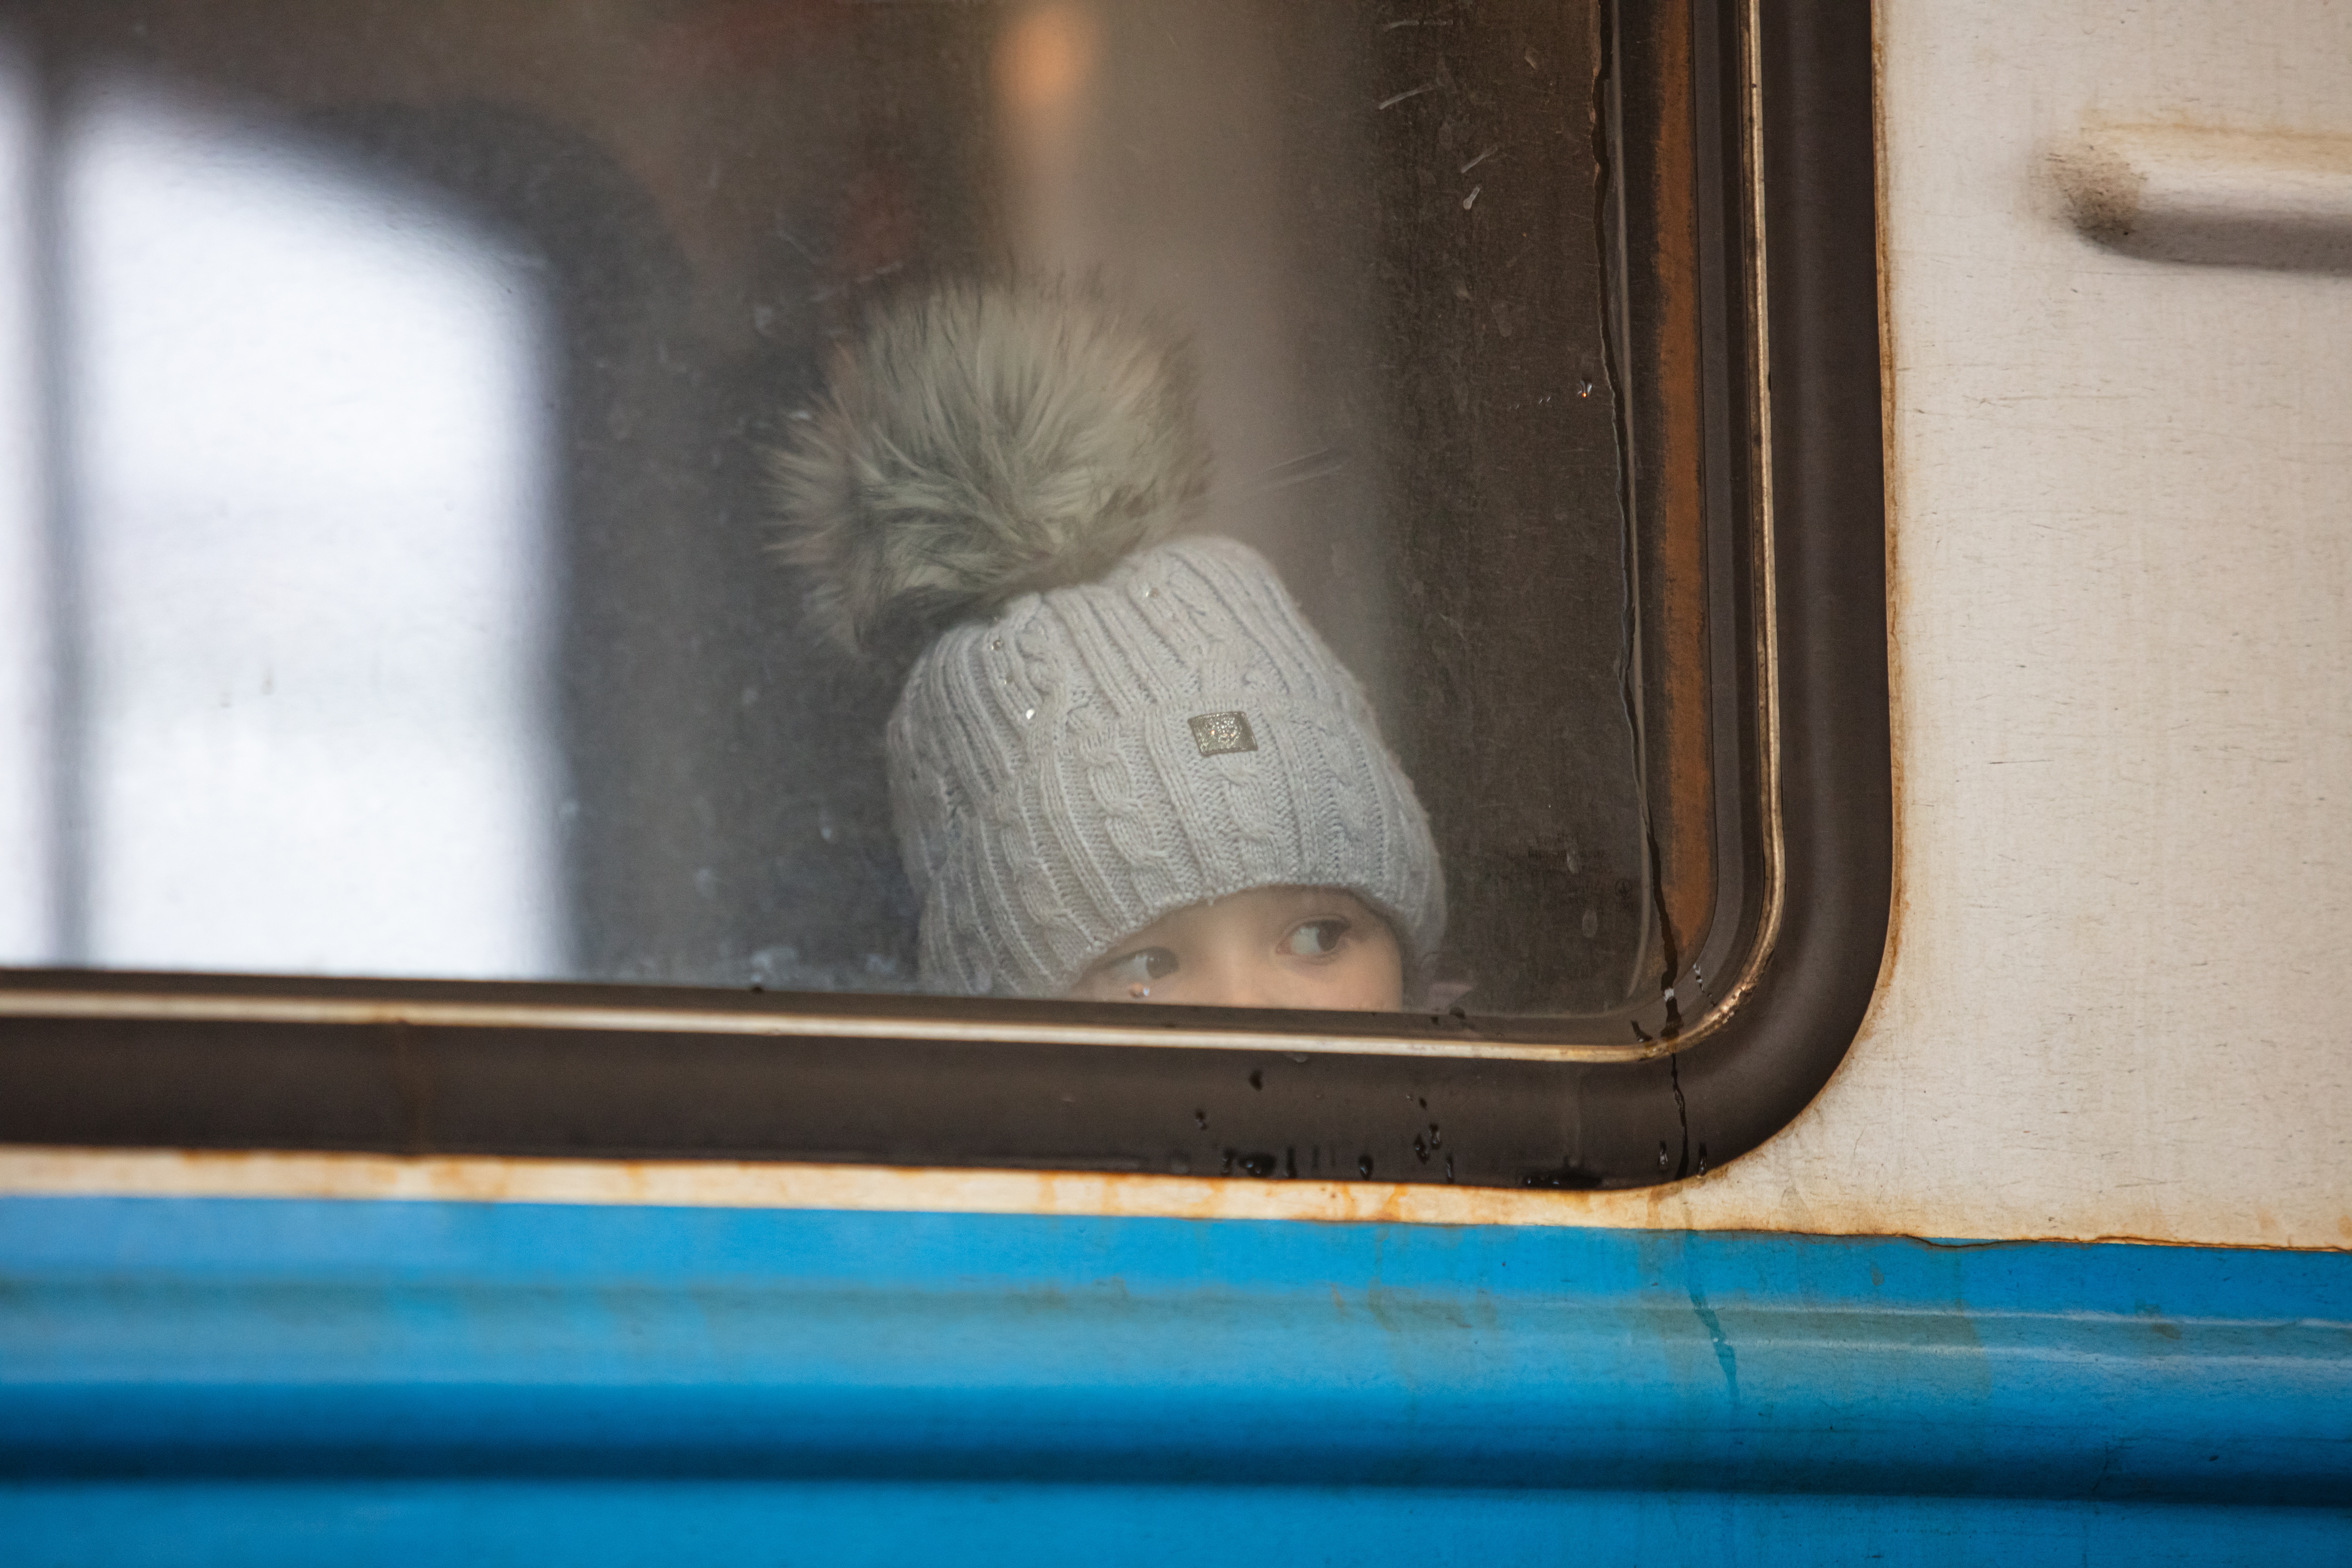 Over Half of Ukraine’s Children Displaced by One Month of War